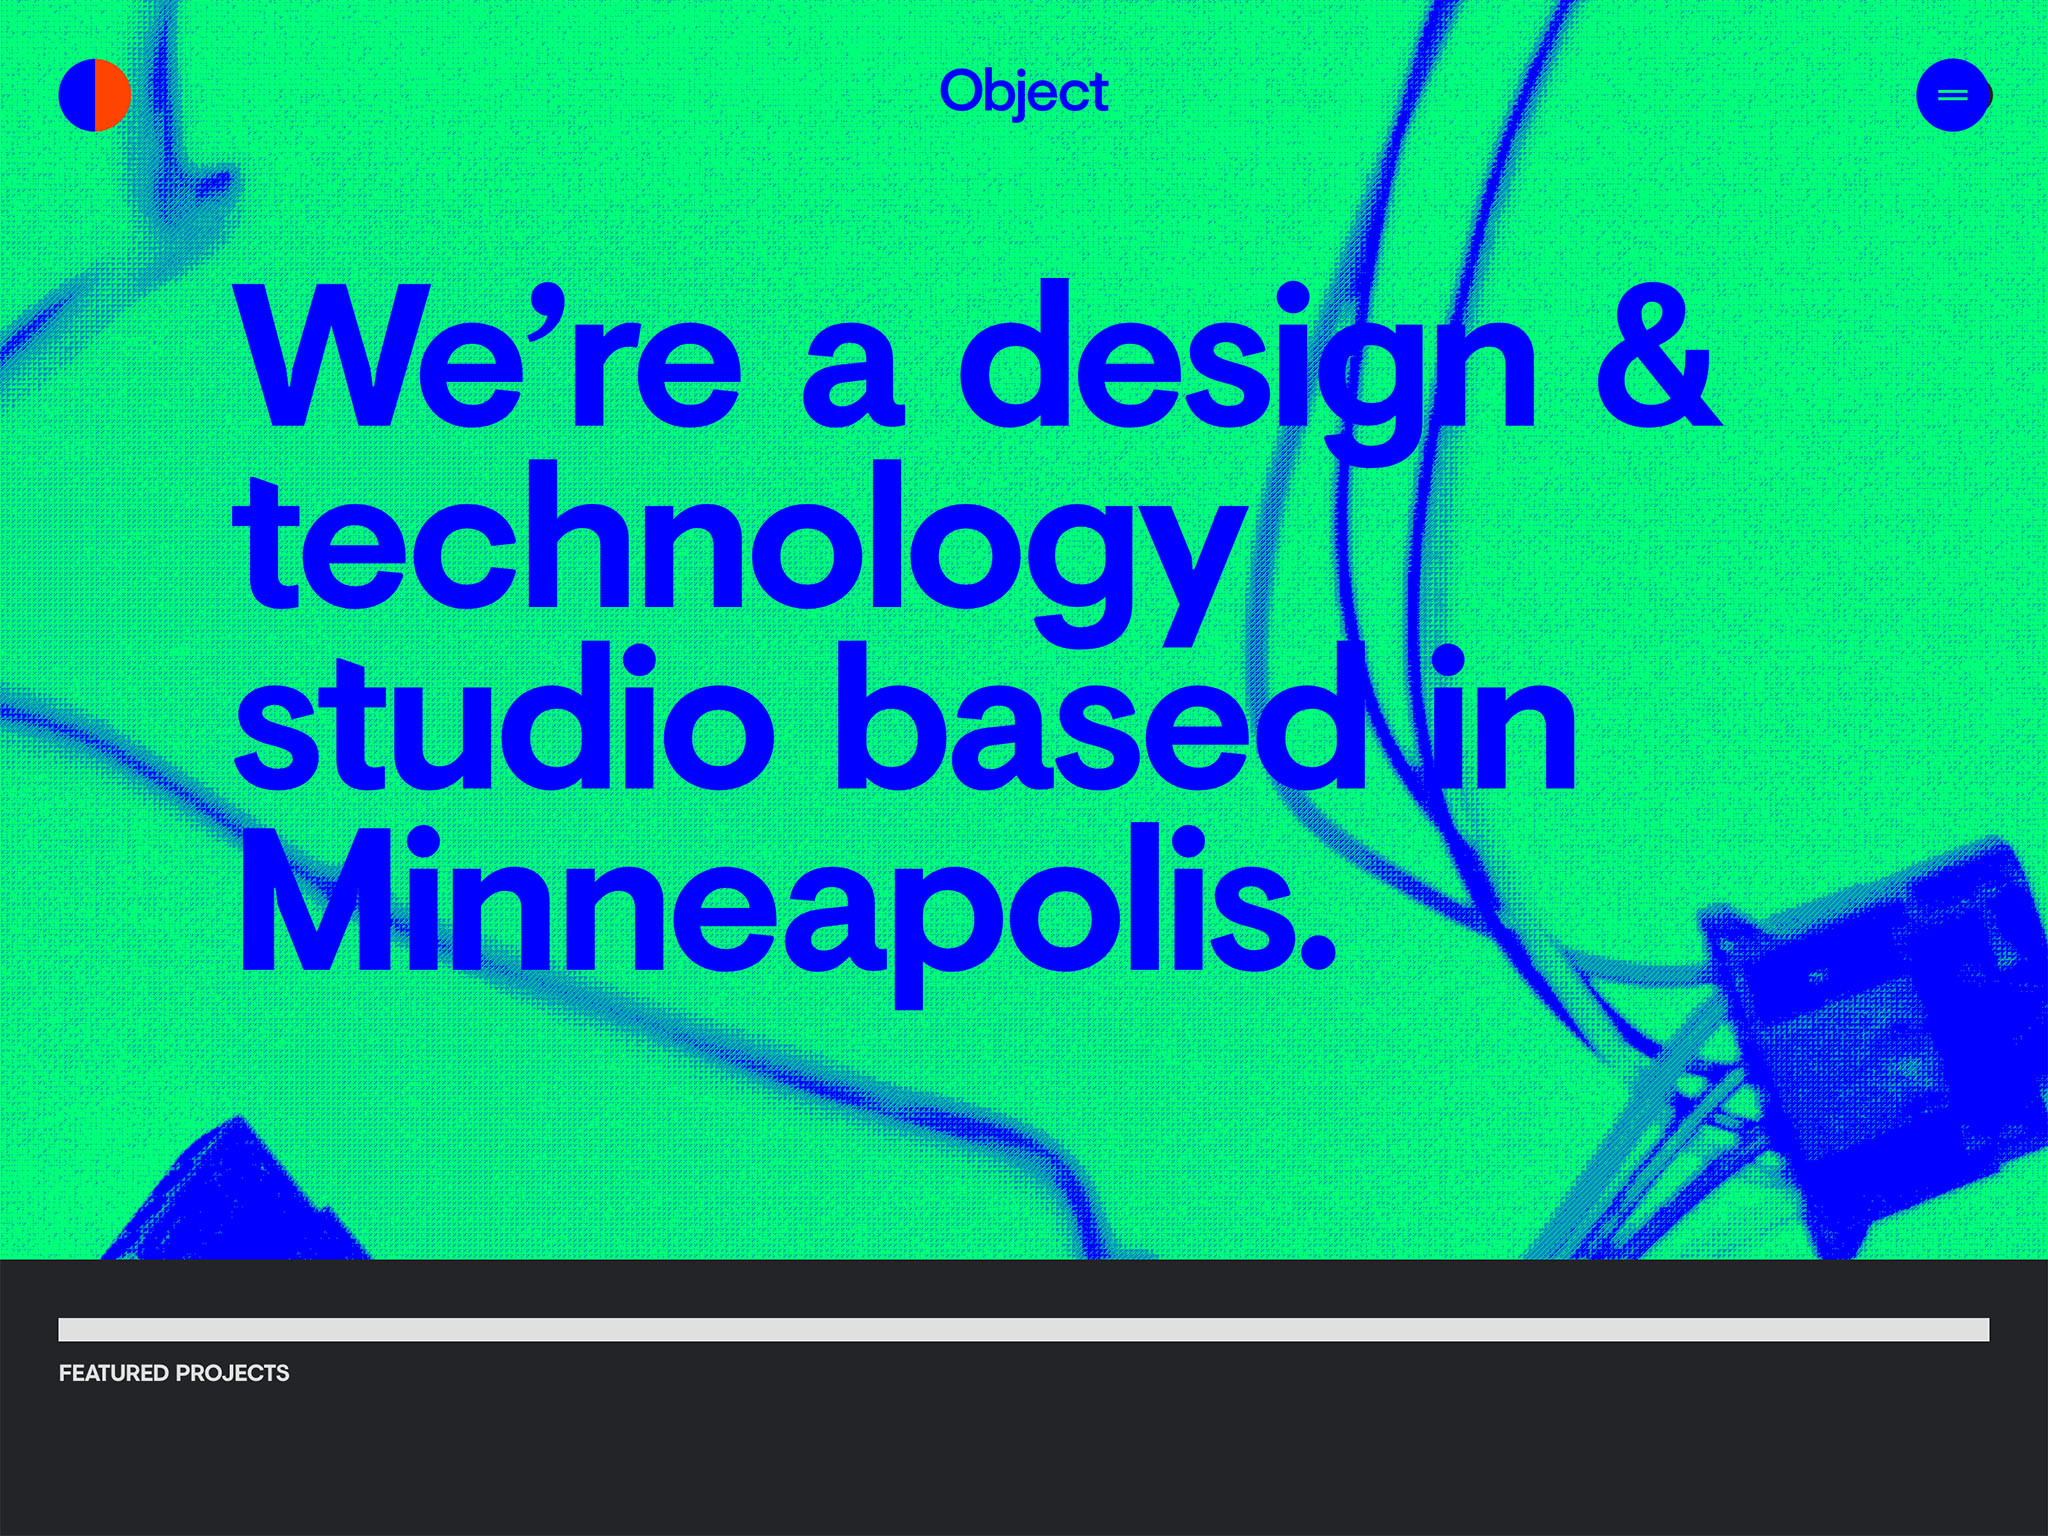 Object | A design & technology studio. | Momentous